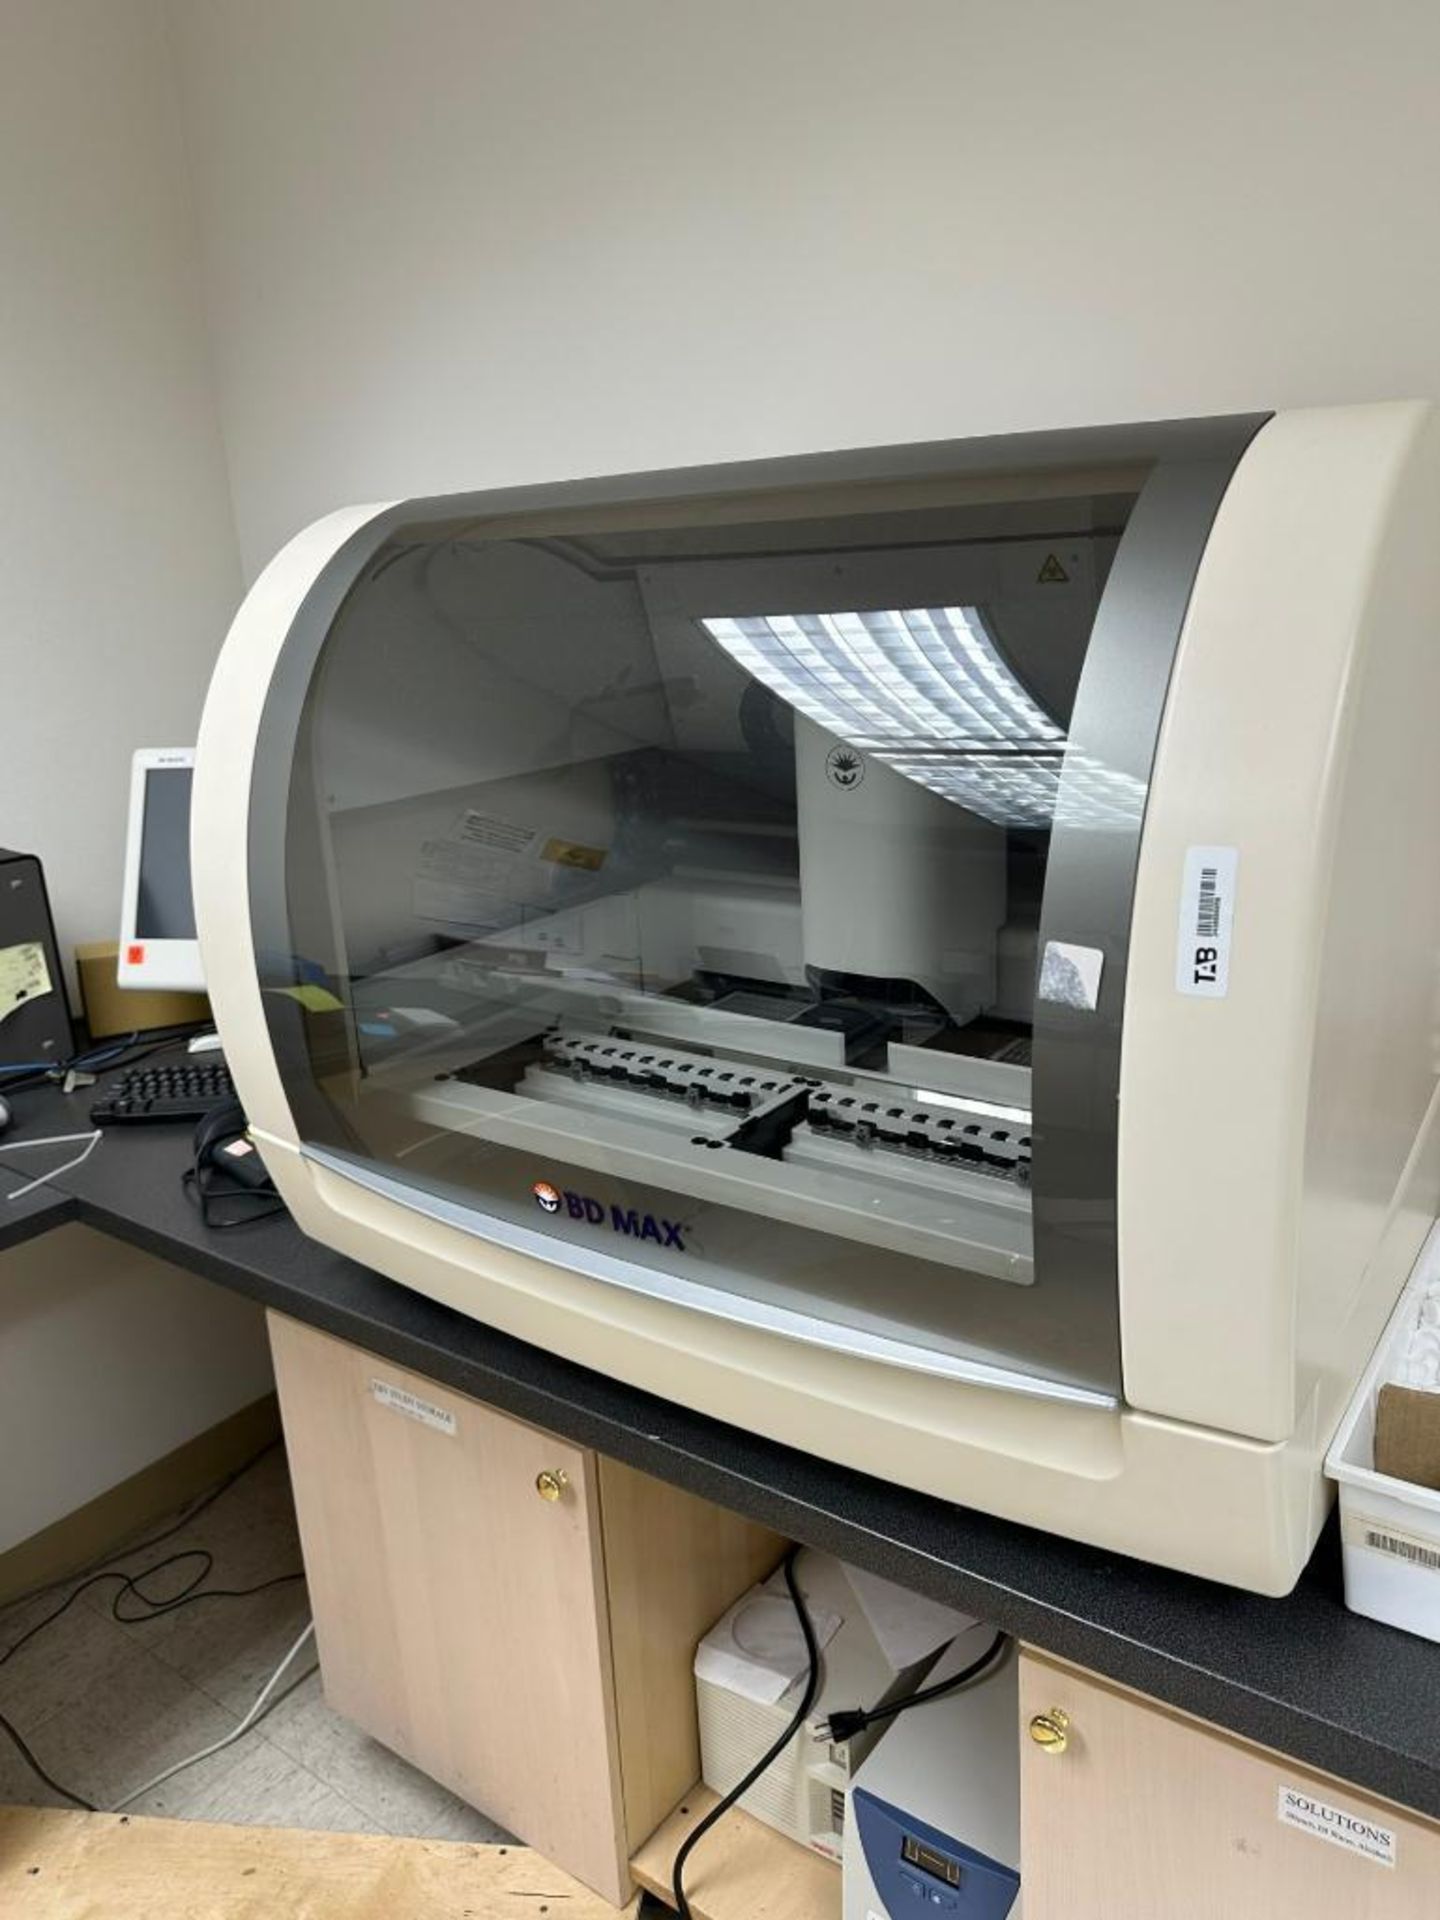 BD MAX MOLECULAR DIAGNOSTIC TESTING SYSTEM; REAL TIME PCR TESTING